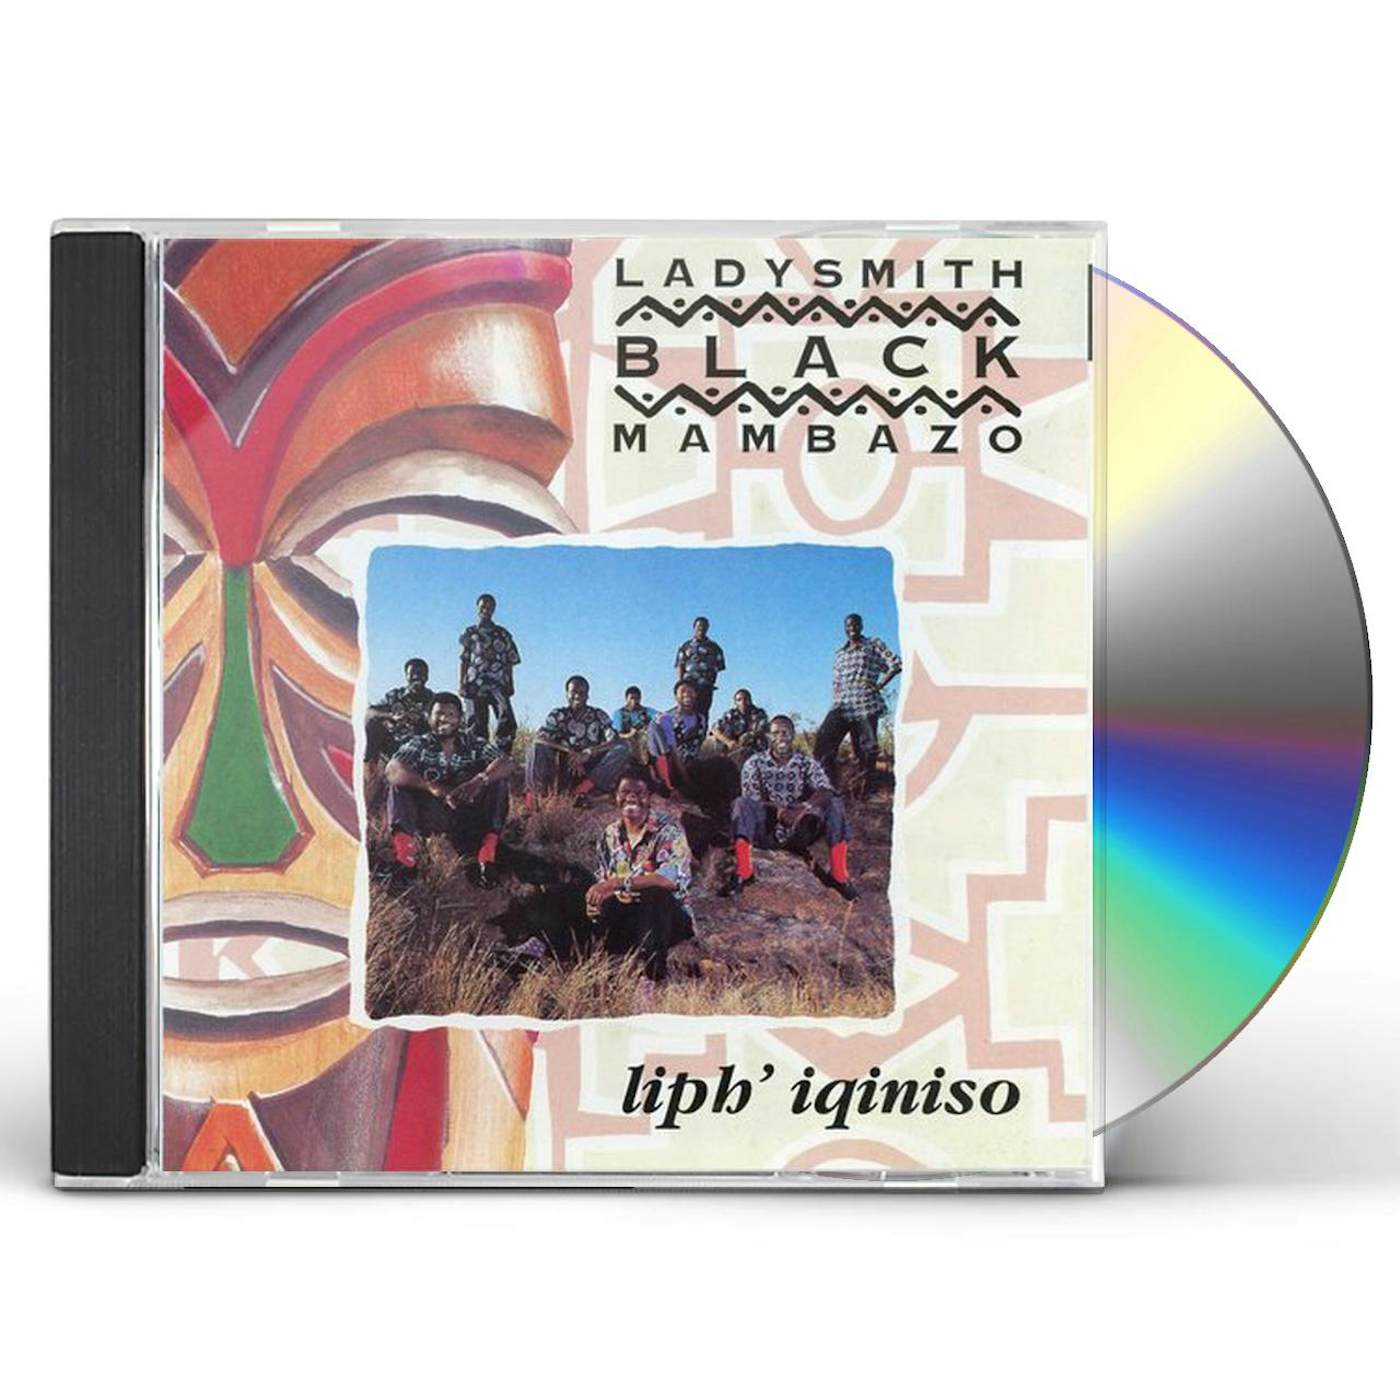 Ladysmith Black Mambazo LIPH'IQINISO CD